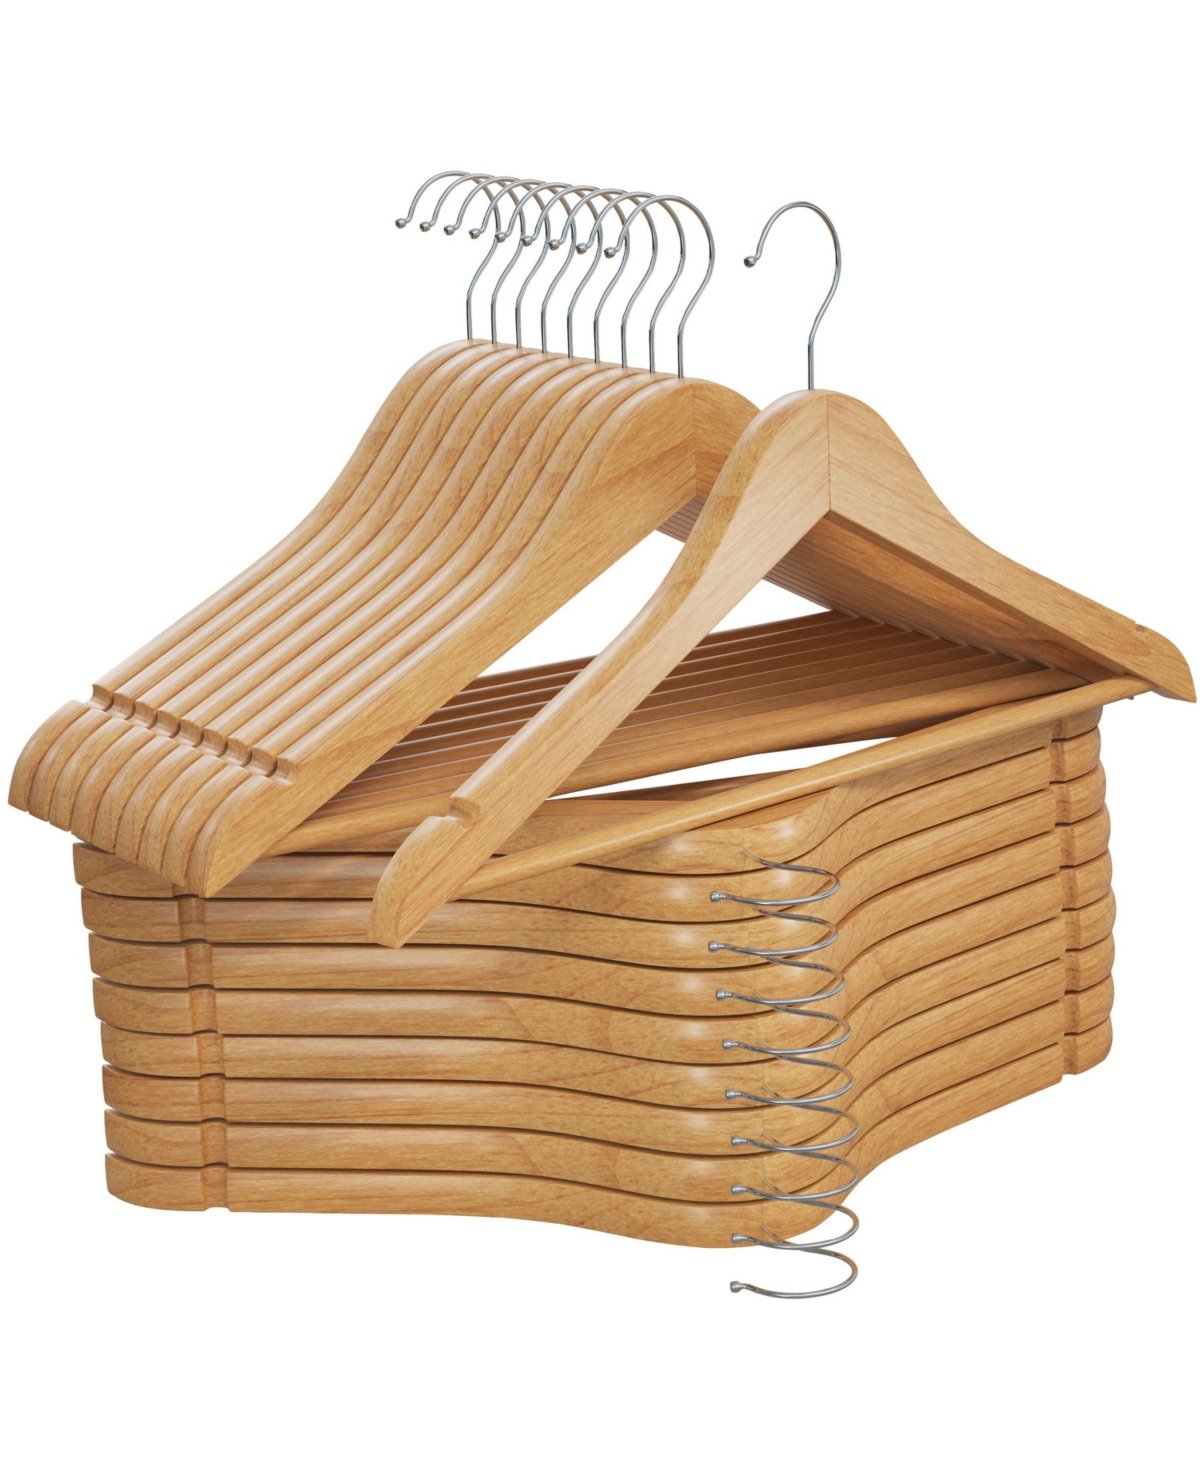 20 Pack Natural Wood Solid Wood Clothes Hangers, Coat Hanger Wooden Hangers - Wood